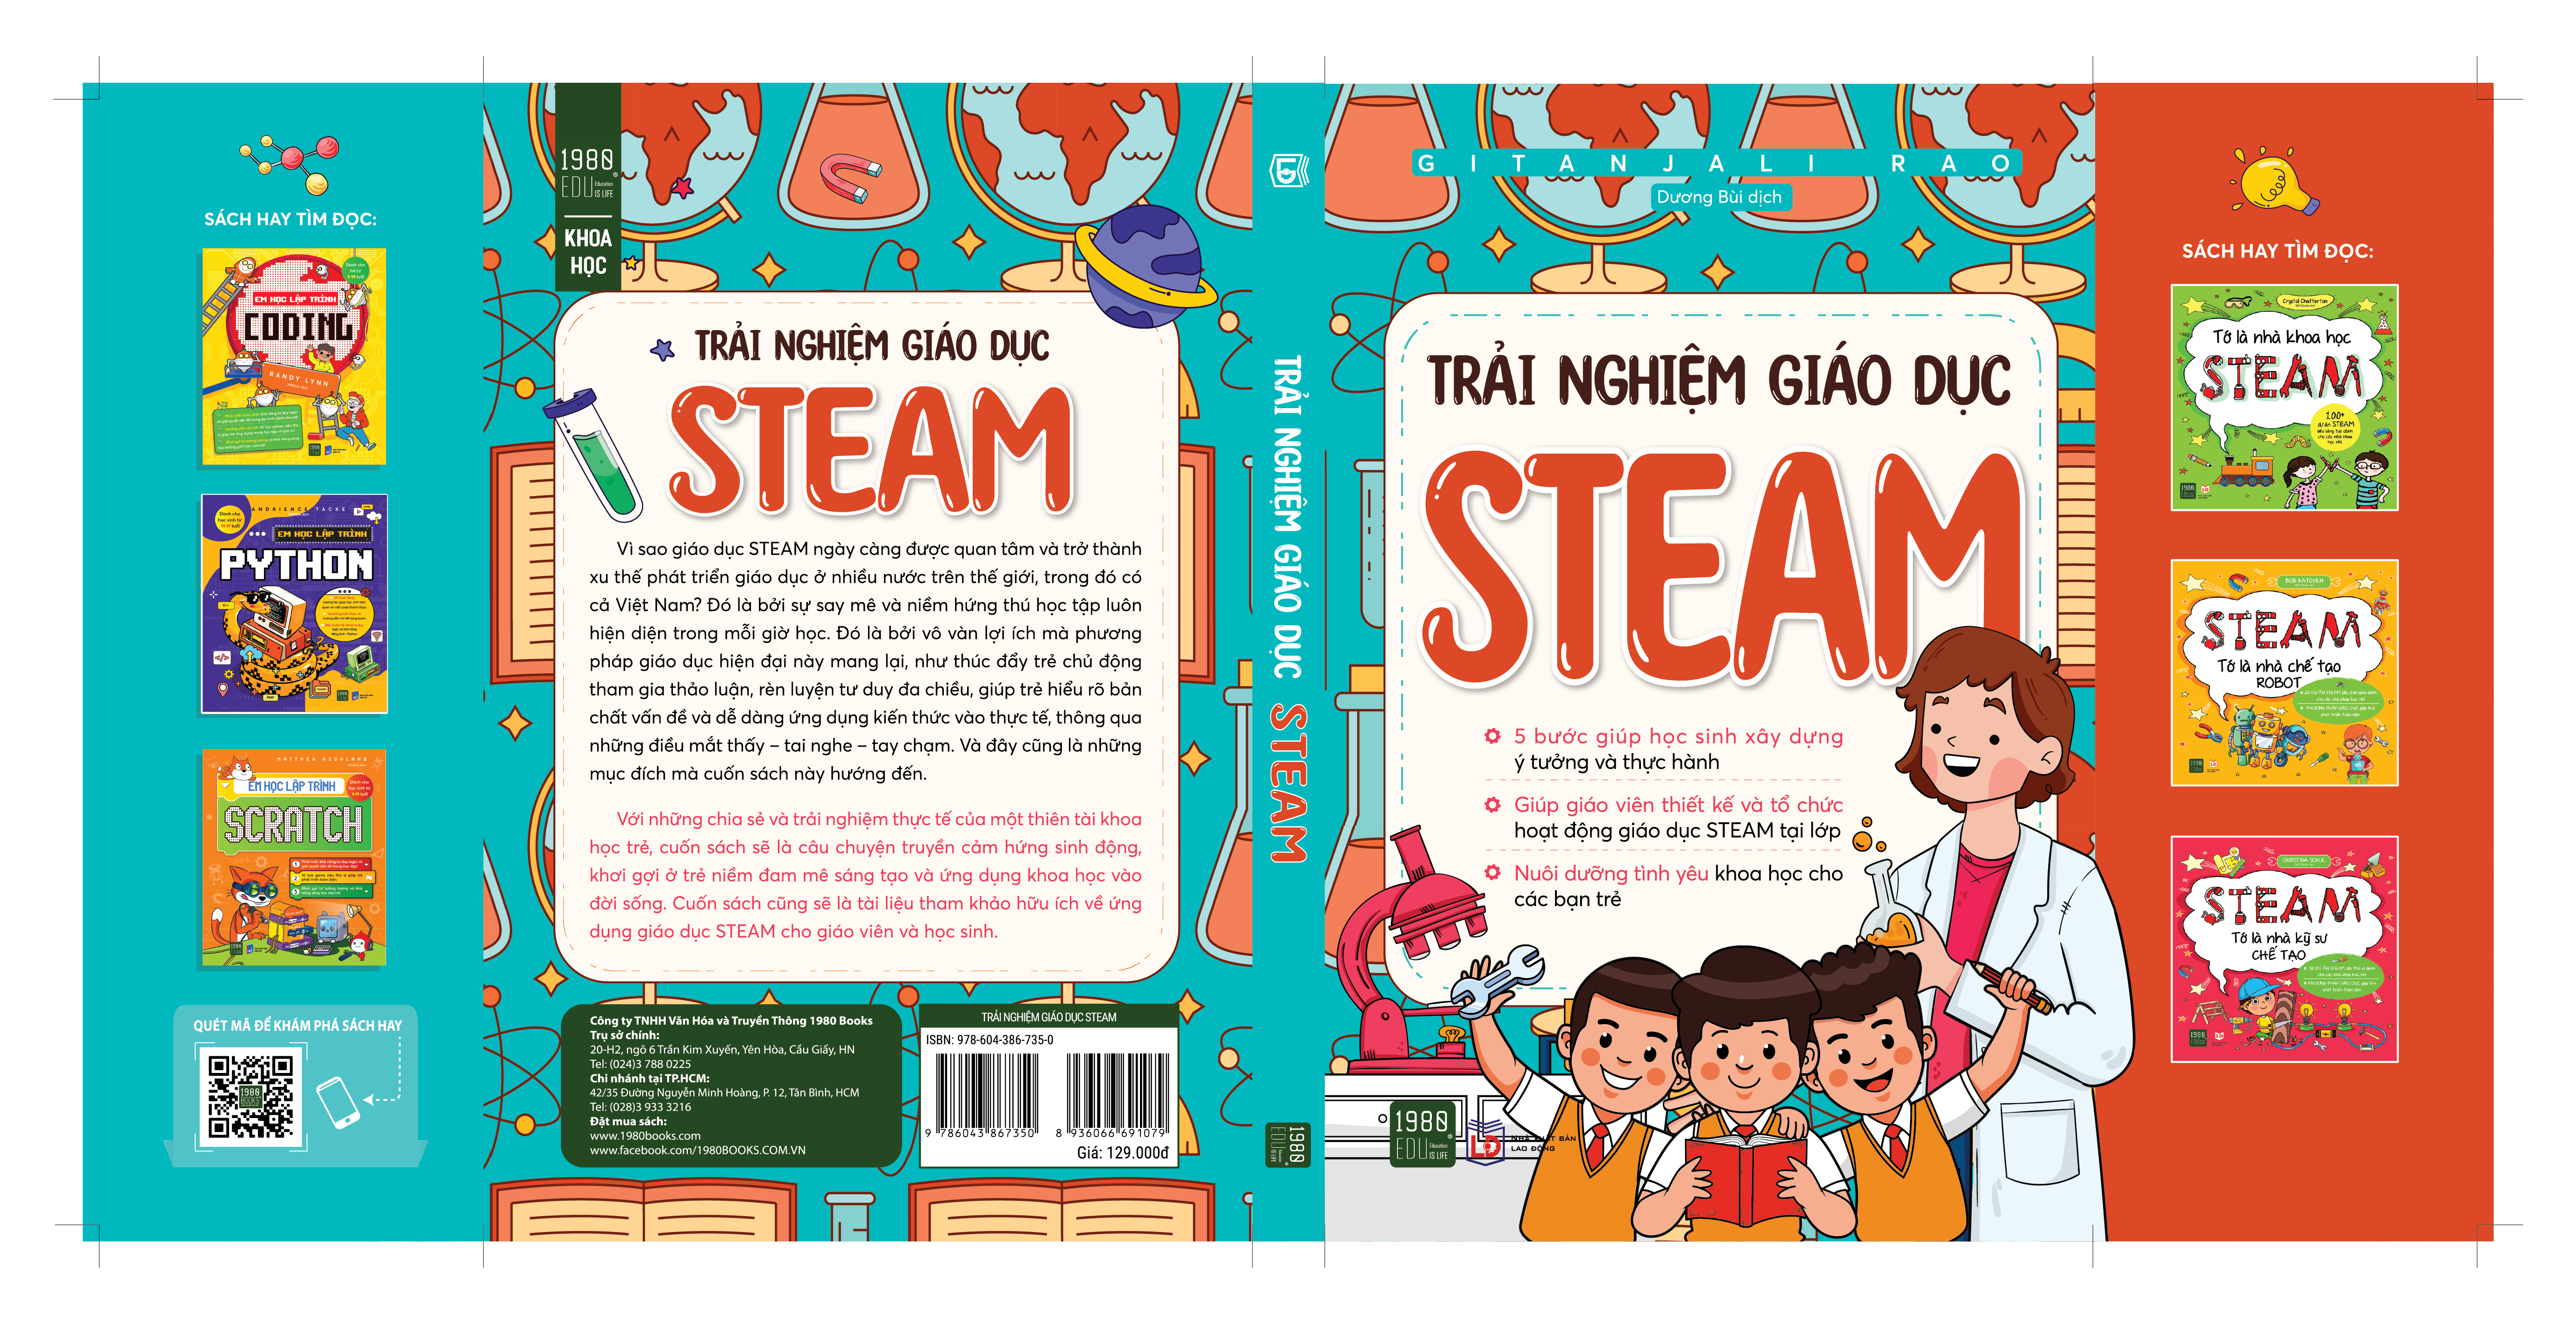 Trải nghiệm giáo dục Steam - Gitanjali Rao (1980Books HCM)